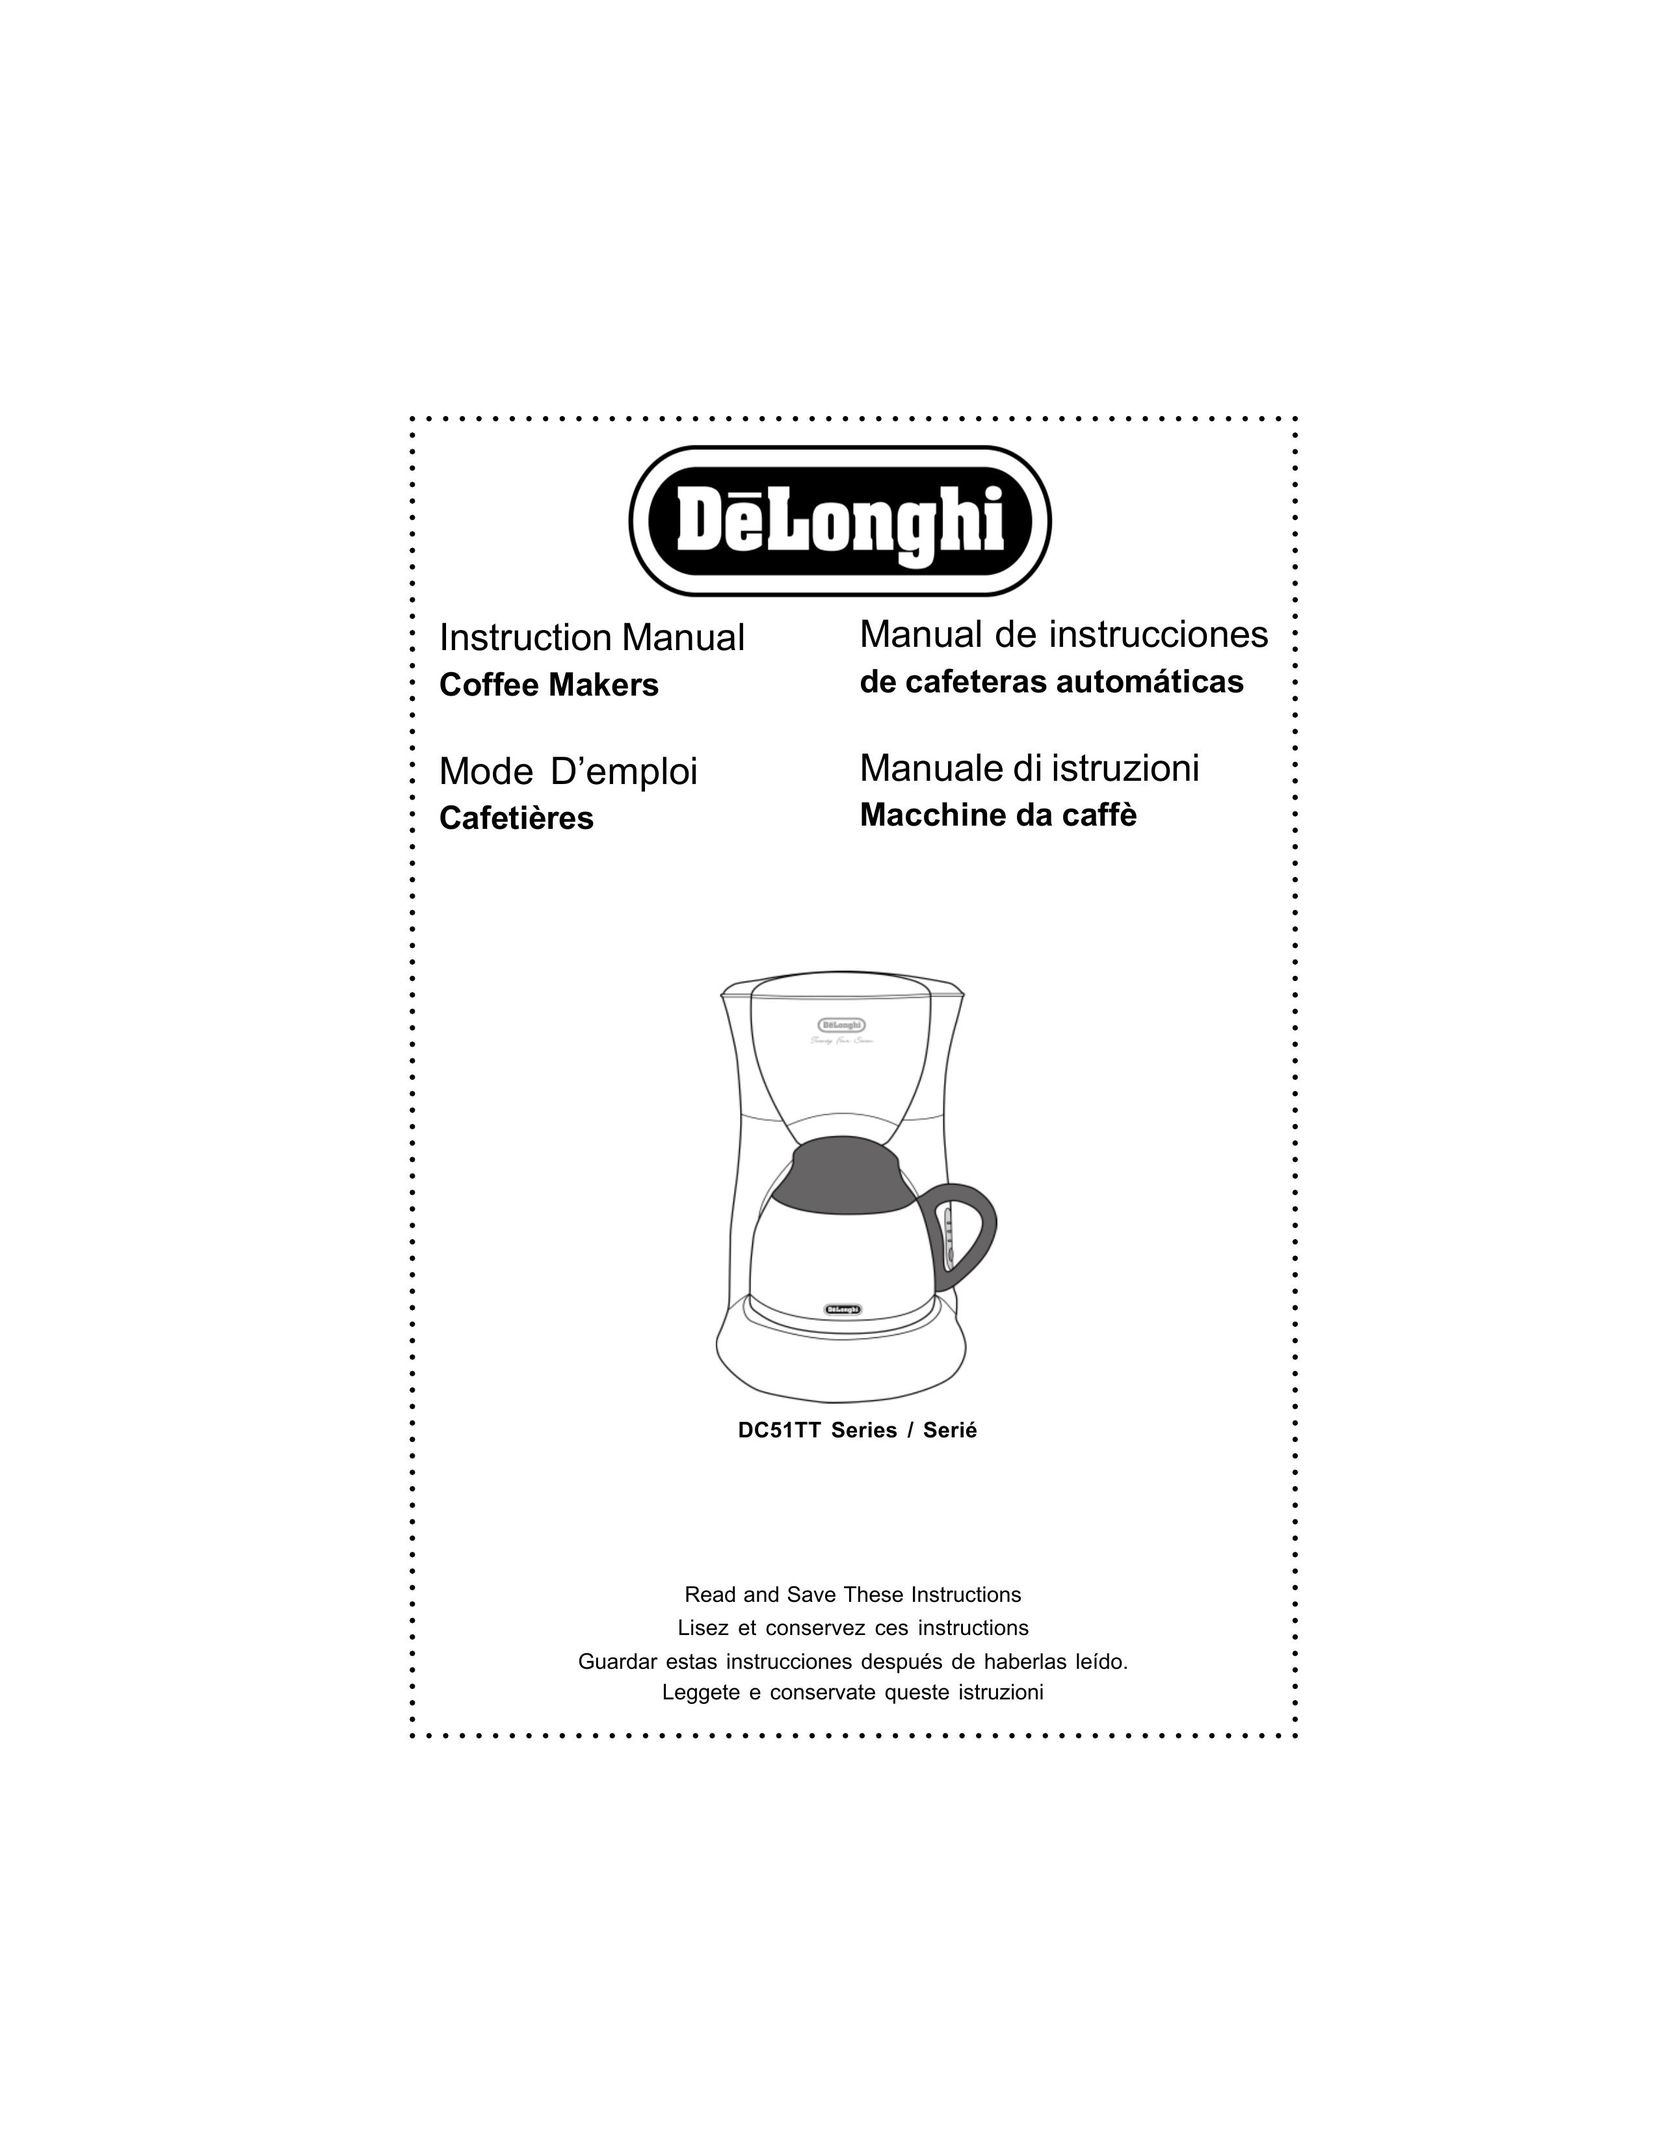 DeLonghi DC51TT Series Coffeemaker User Manual